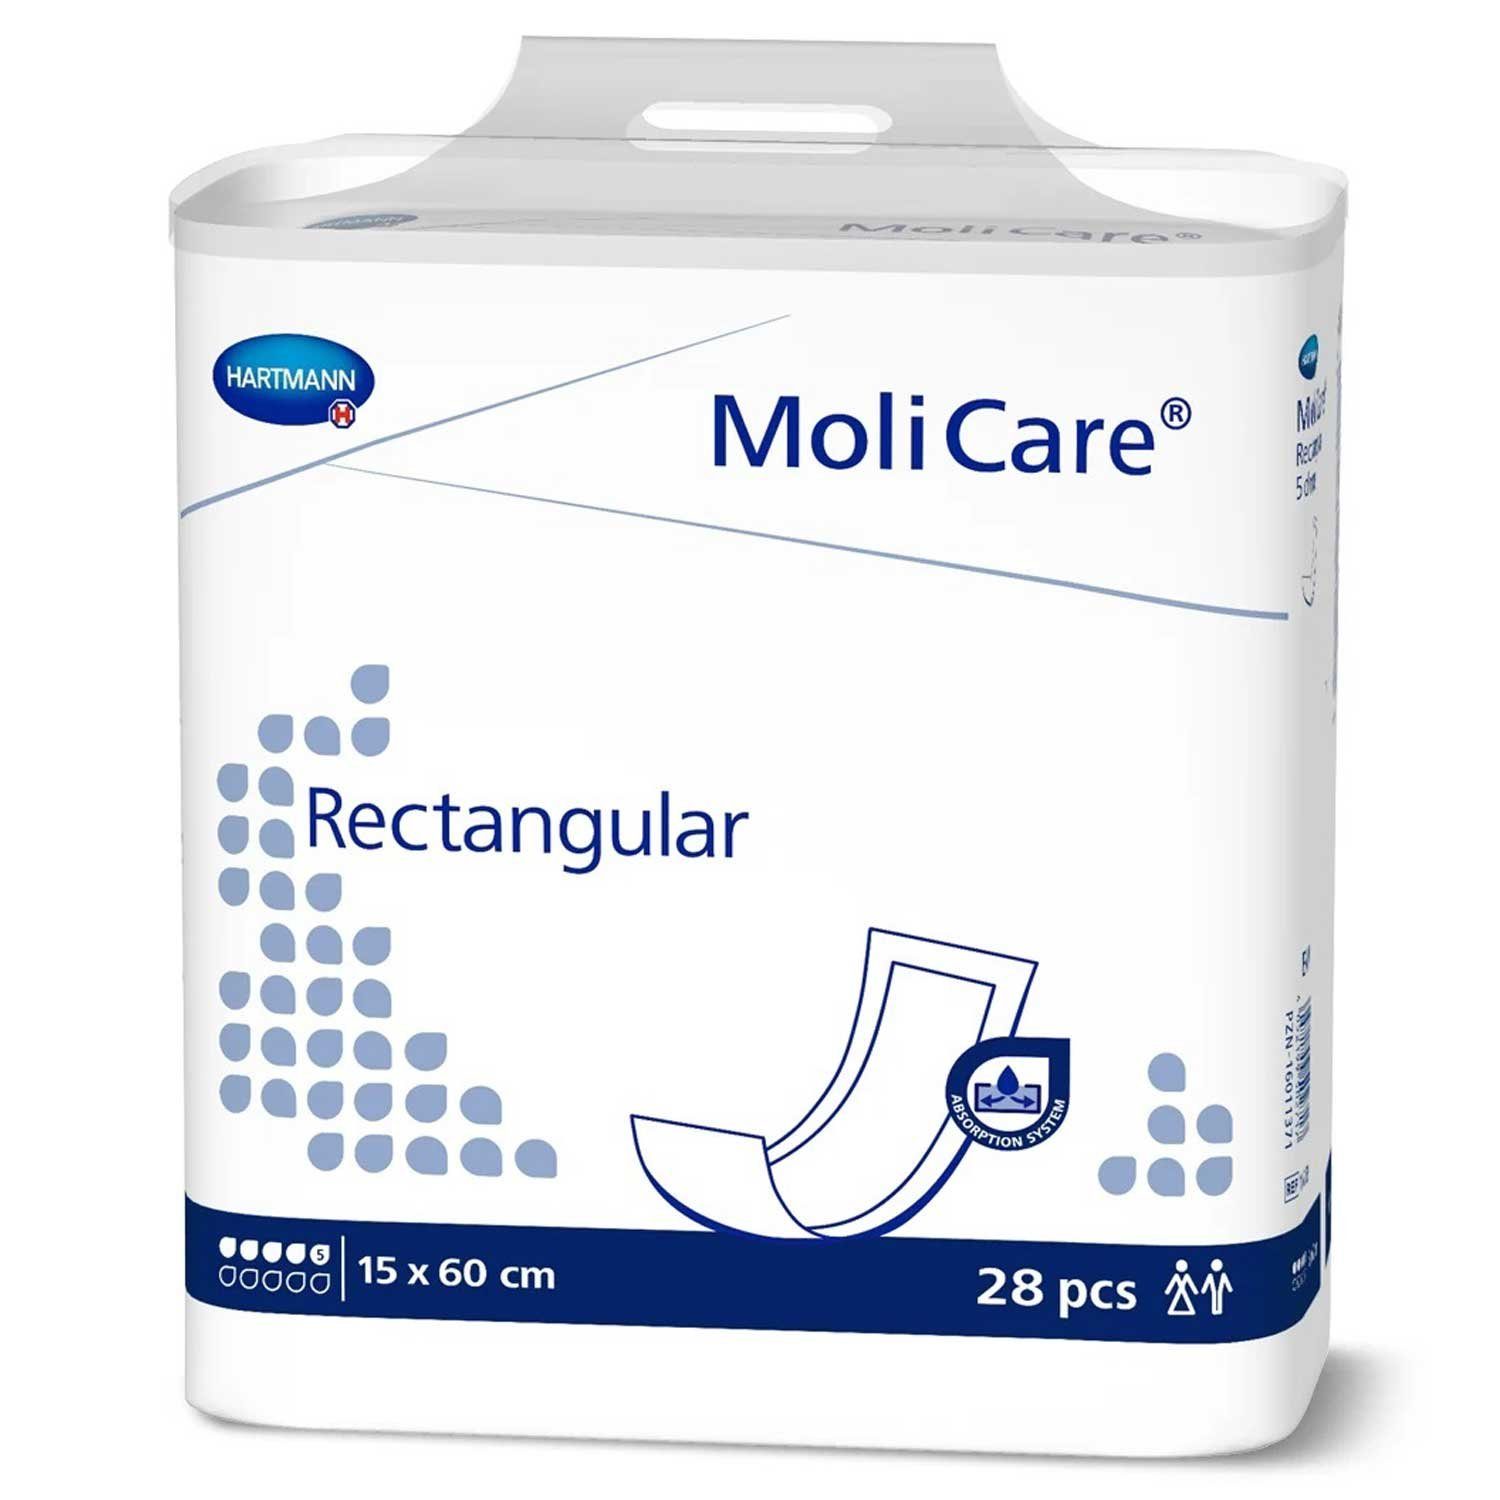 Inkontinenzauflage MoliCare® Rectangular Karton x4 Molicare